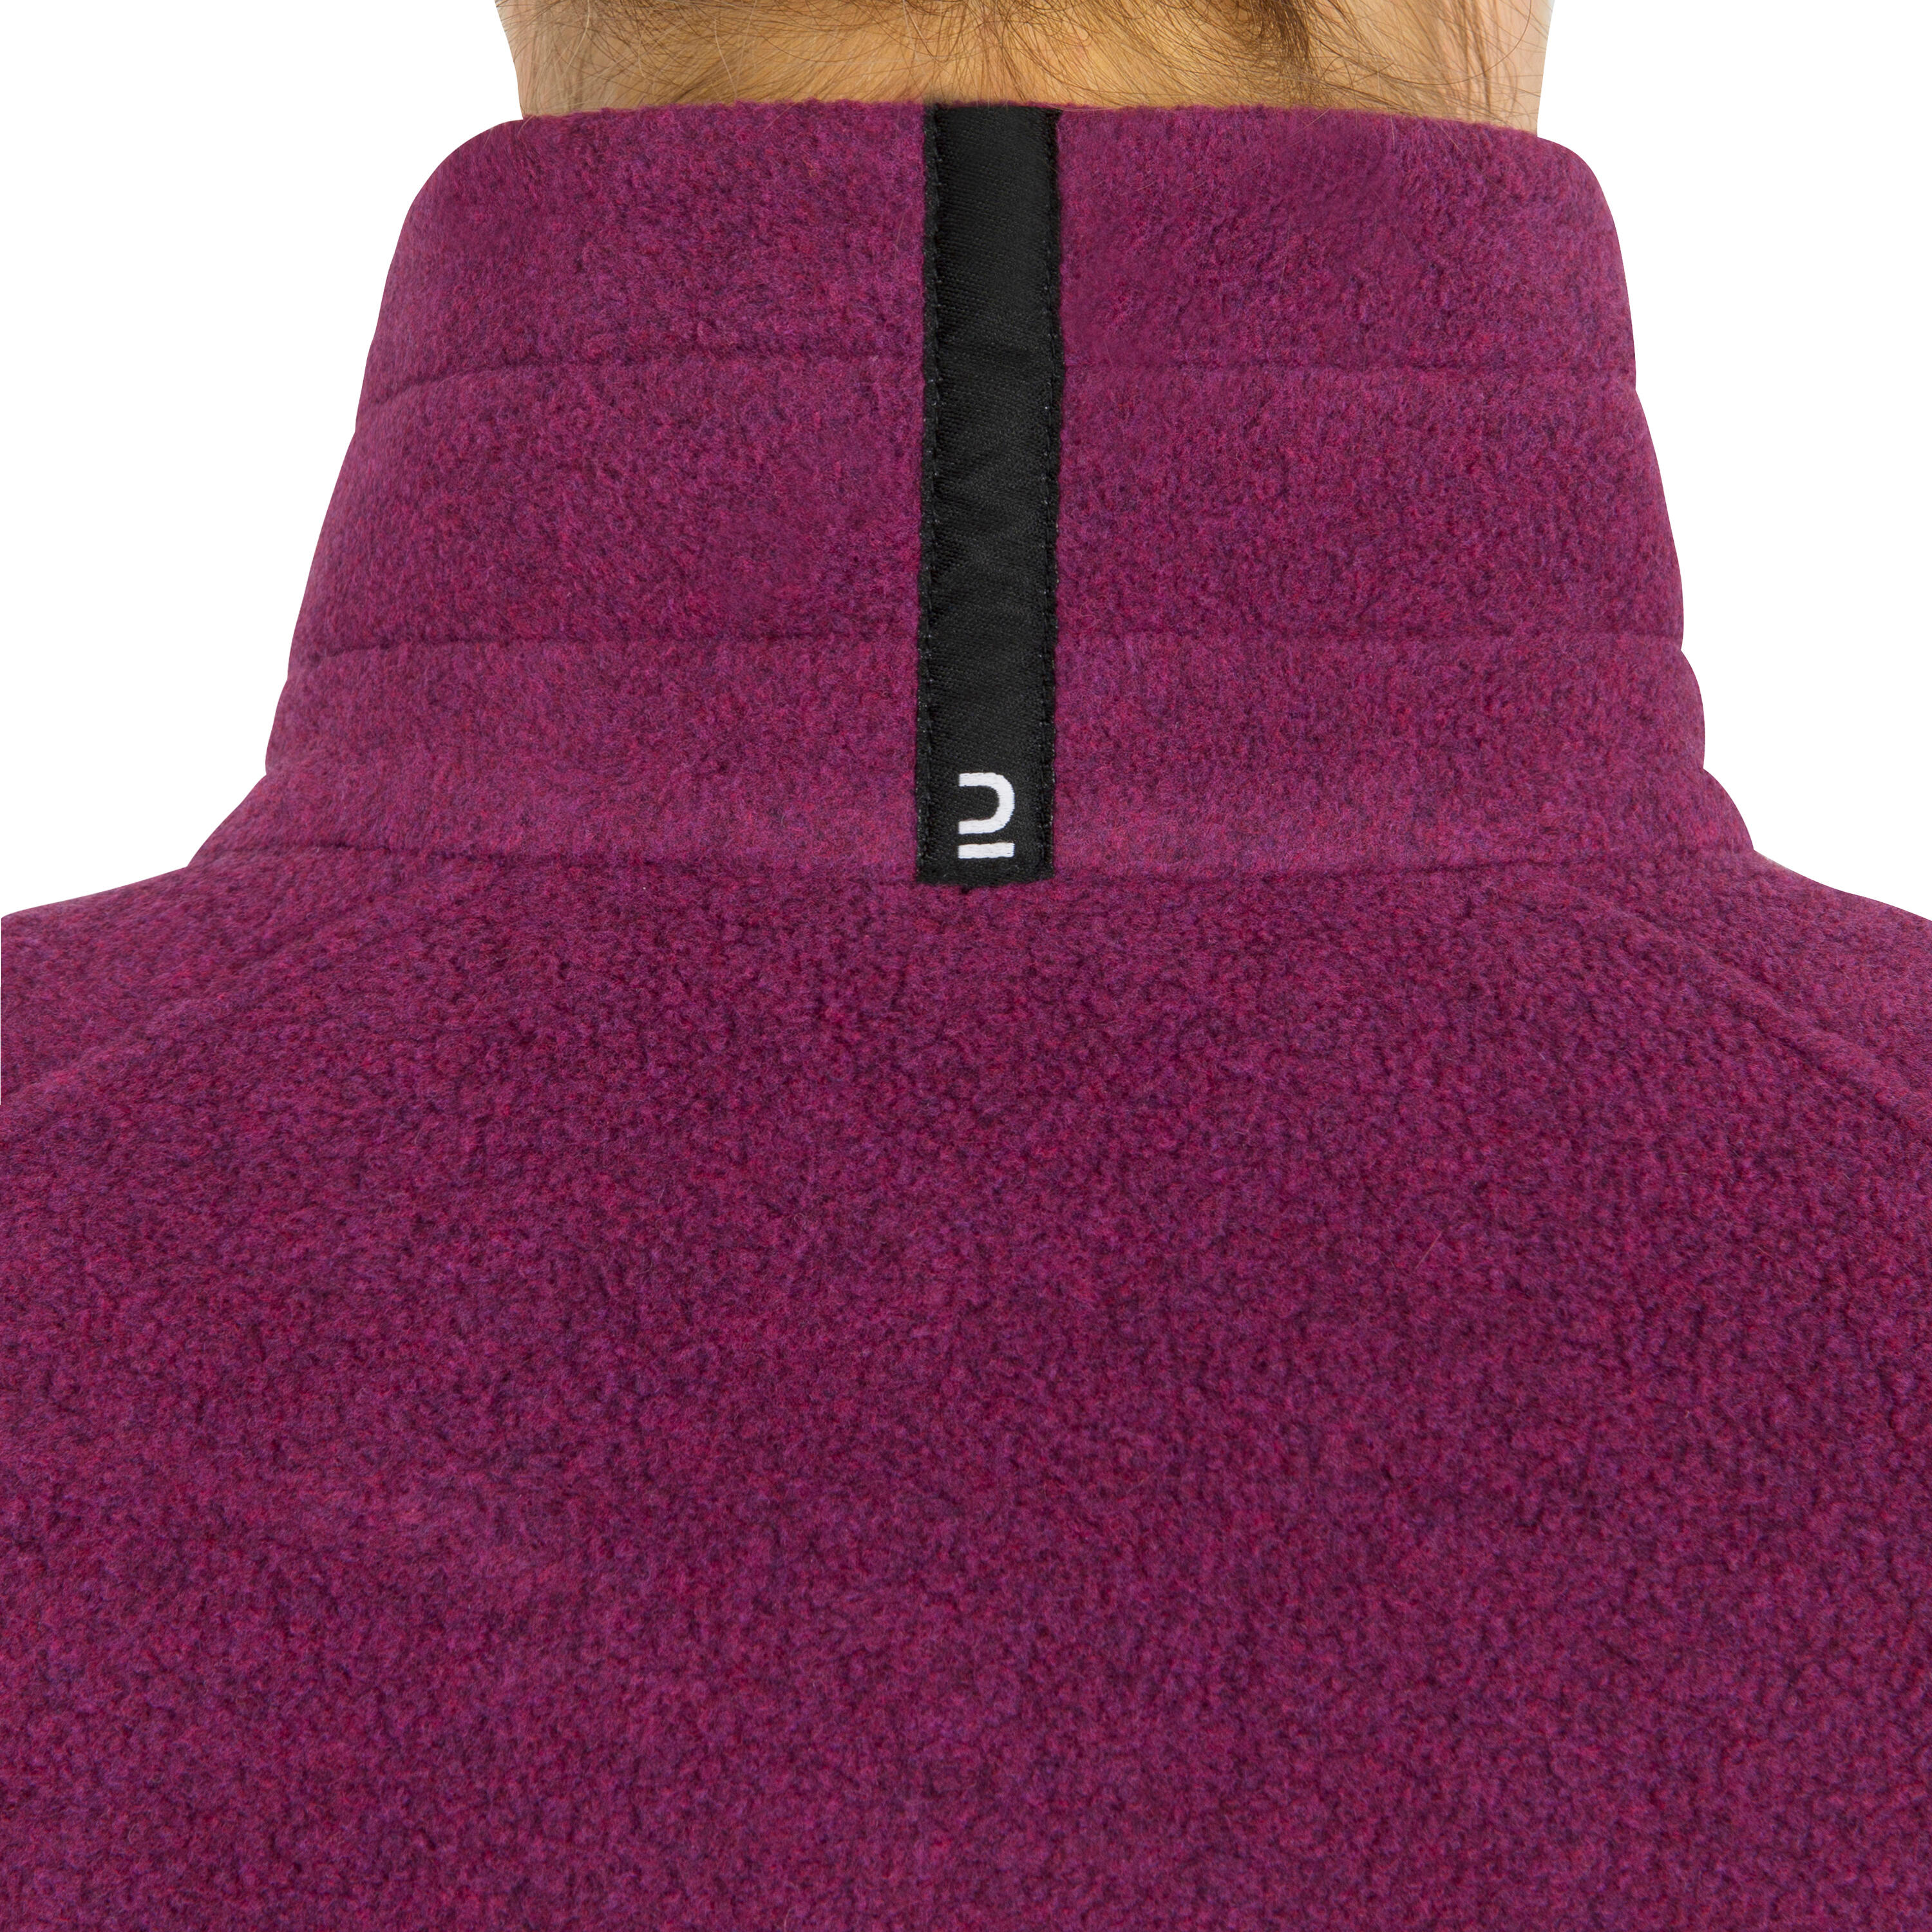 Women warm fleece sailing jacket 100 - Mottled dark Violet 8/10